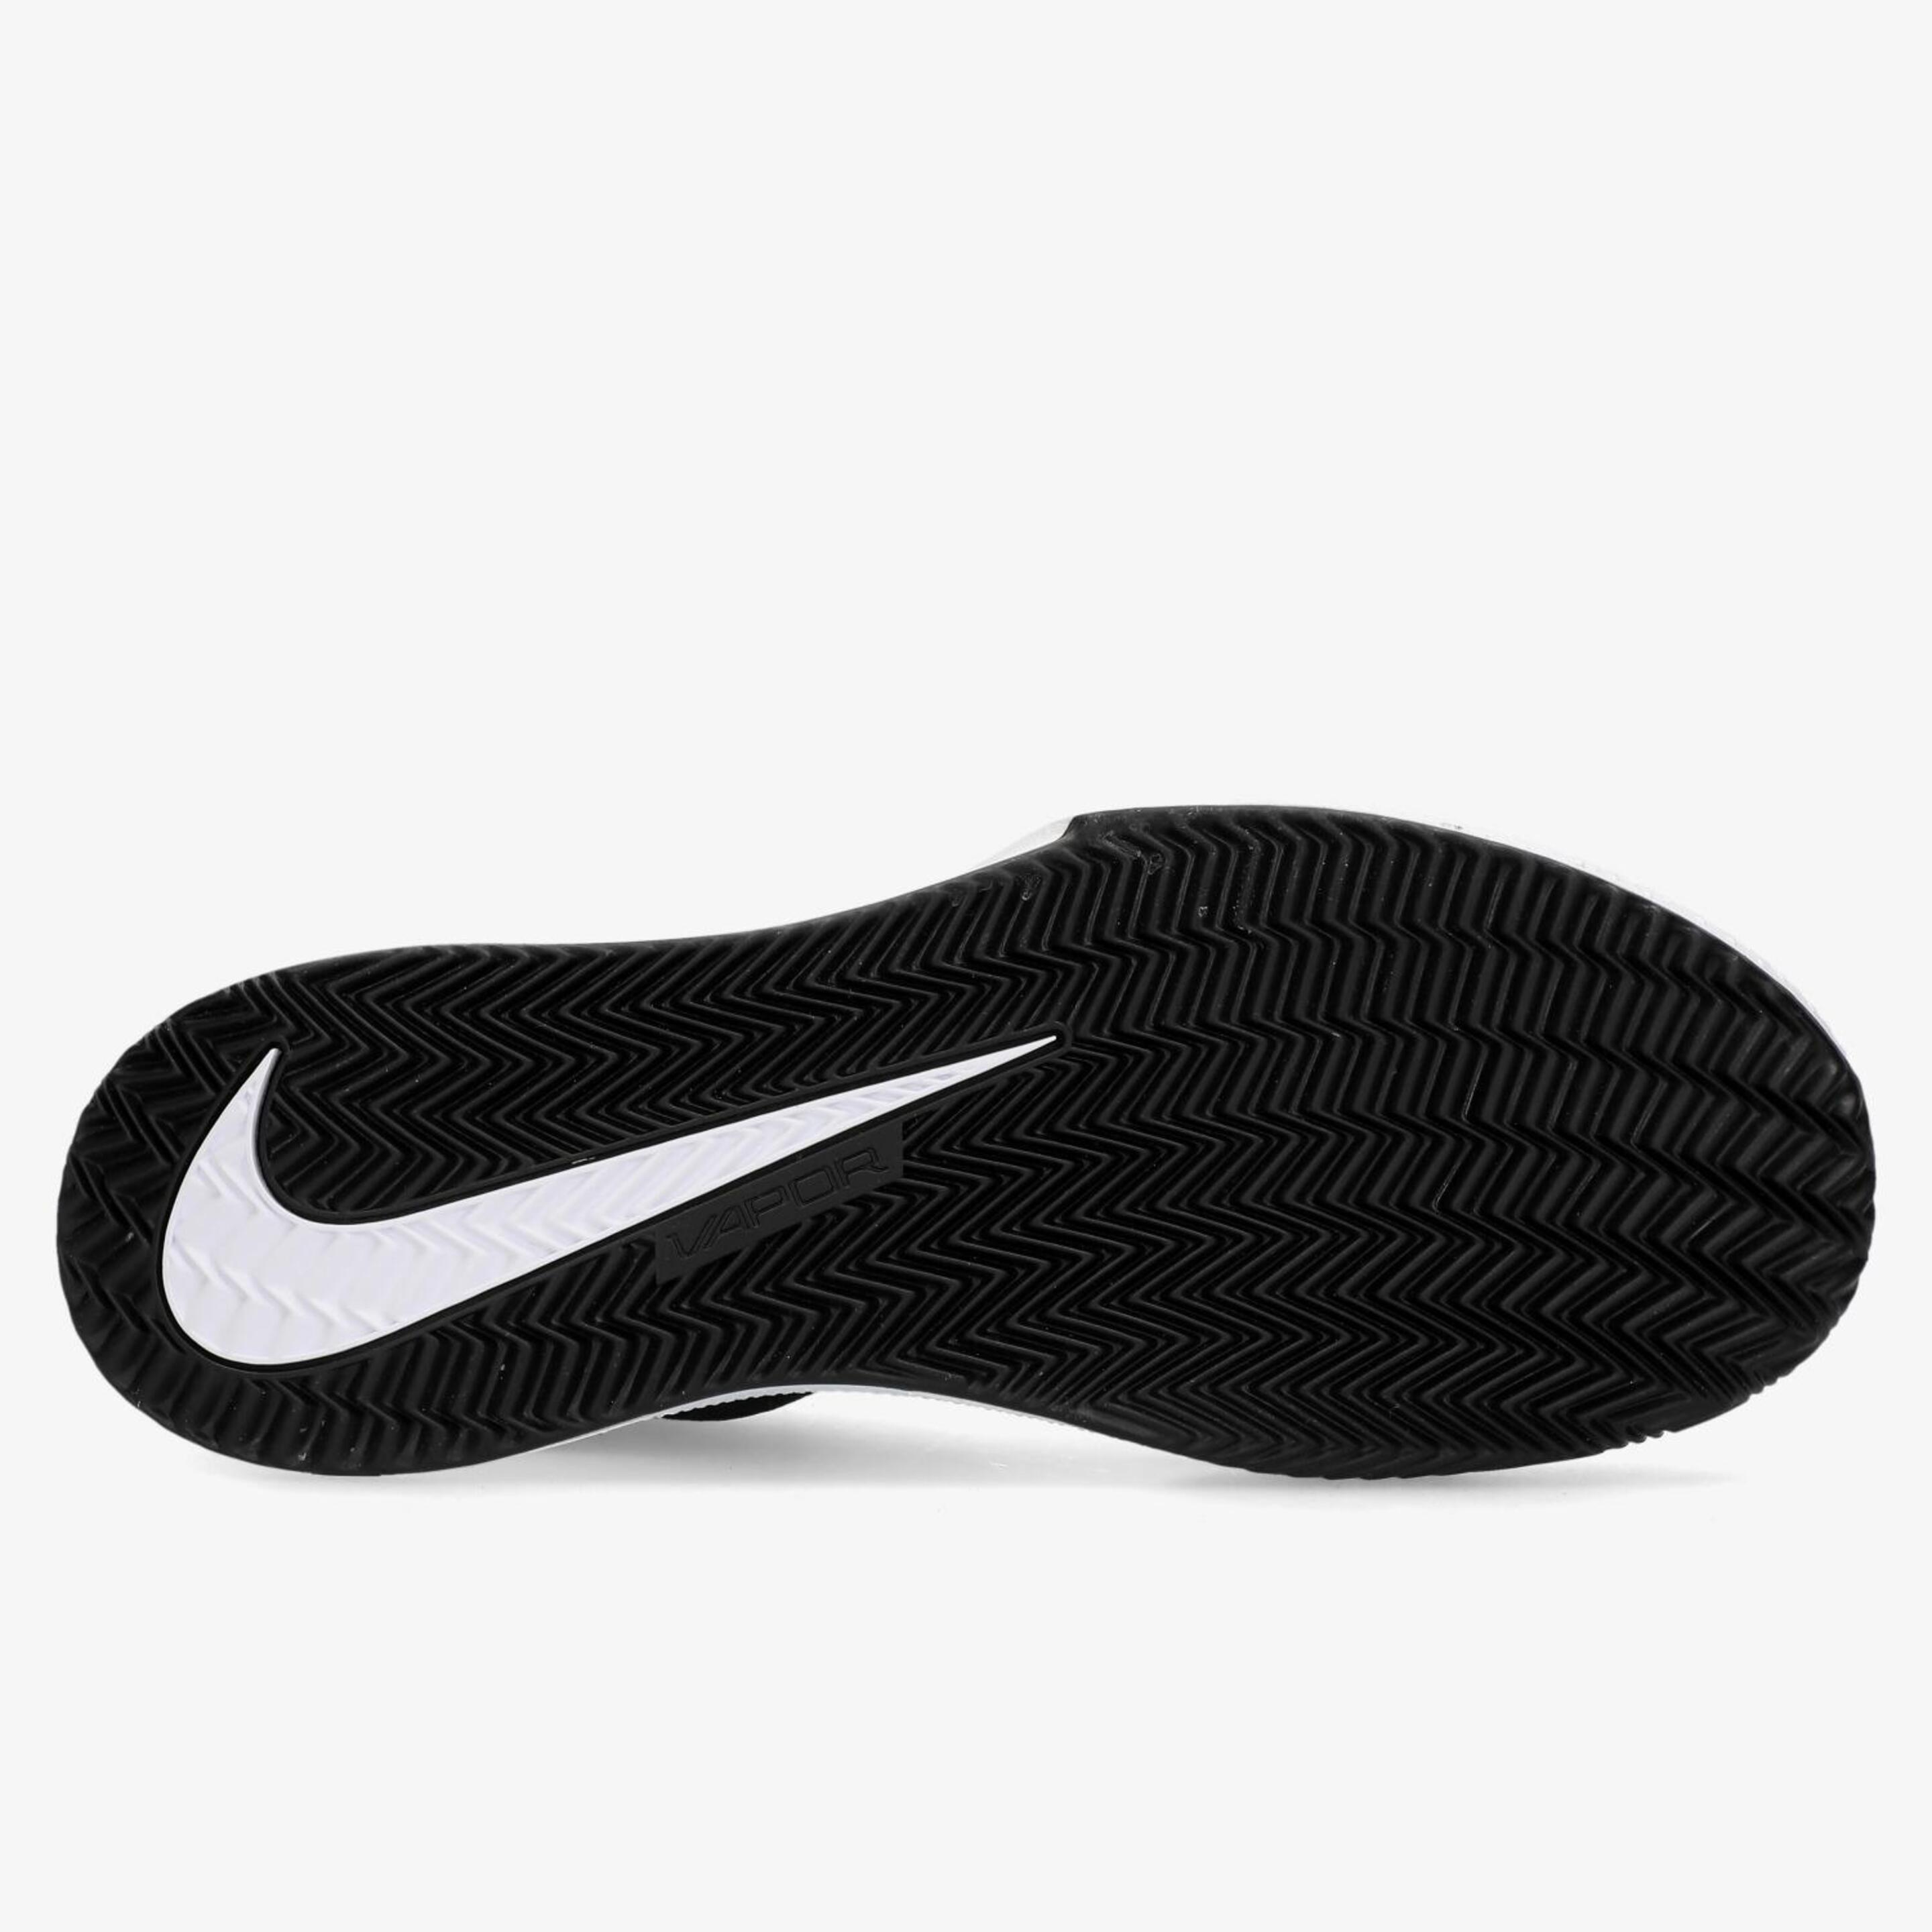 Nike Vapor Lite 2